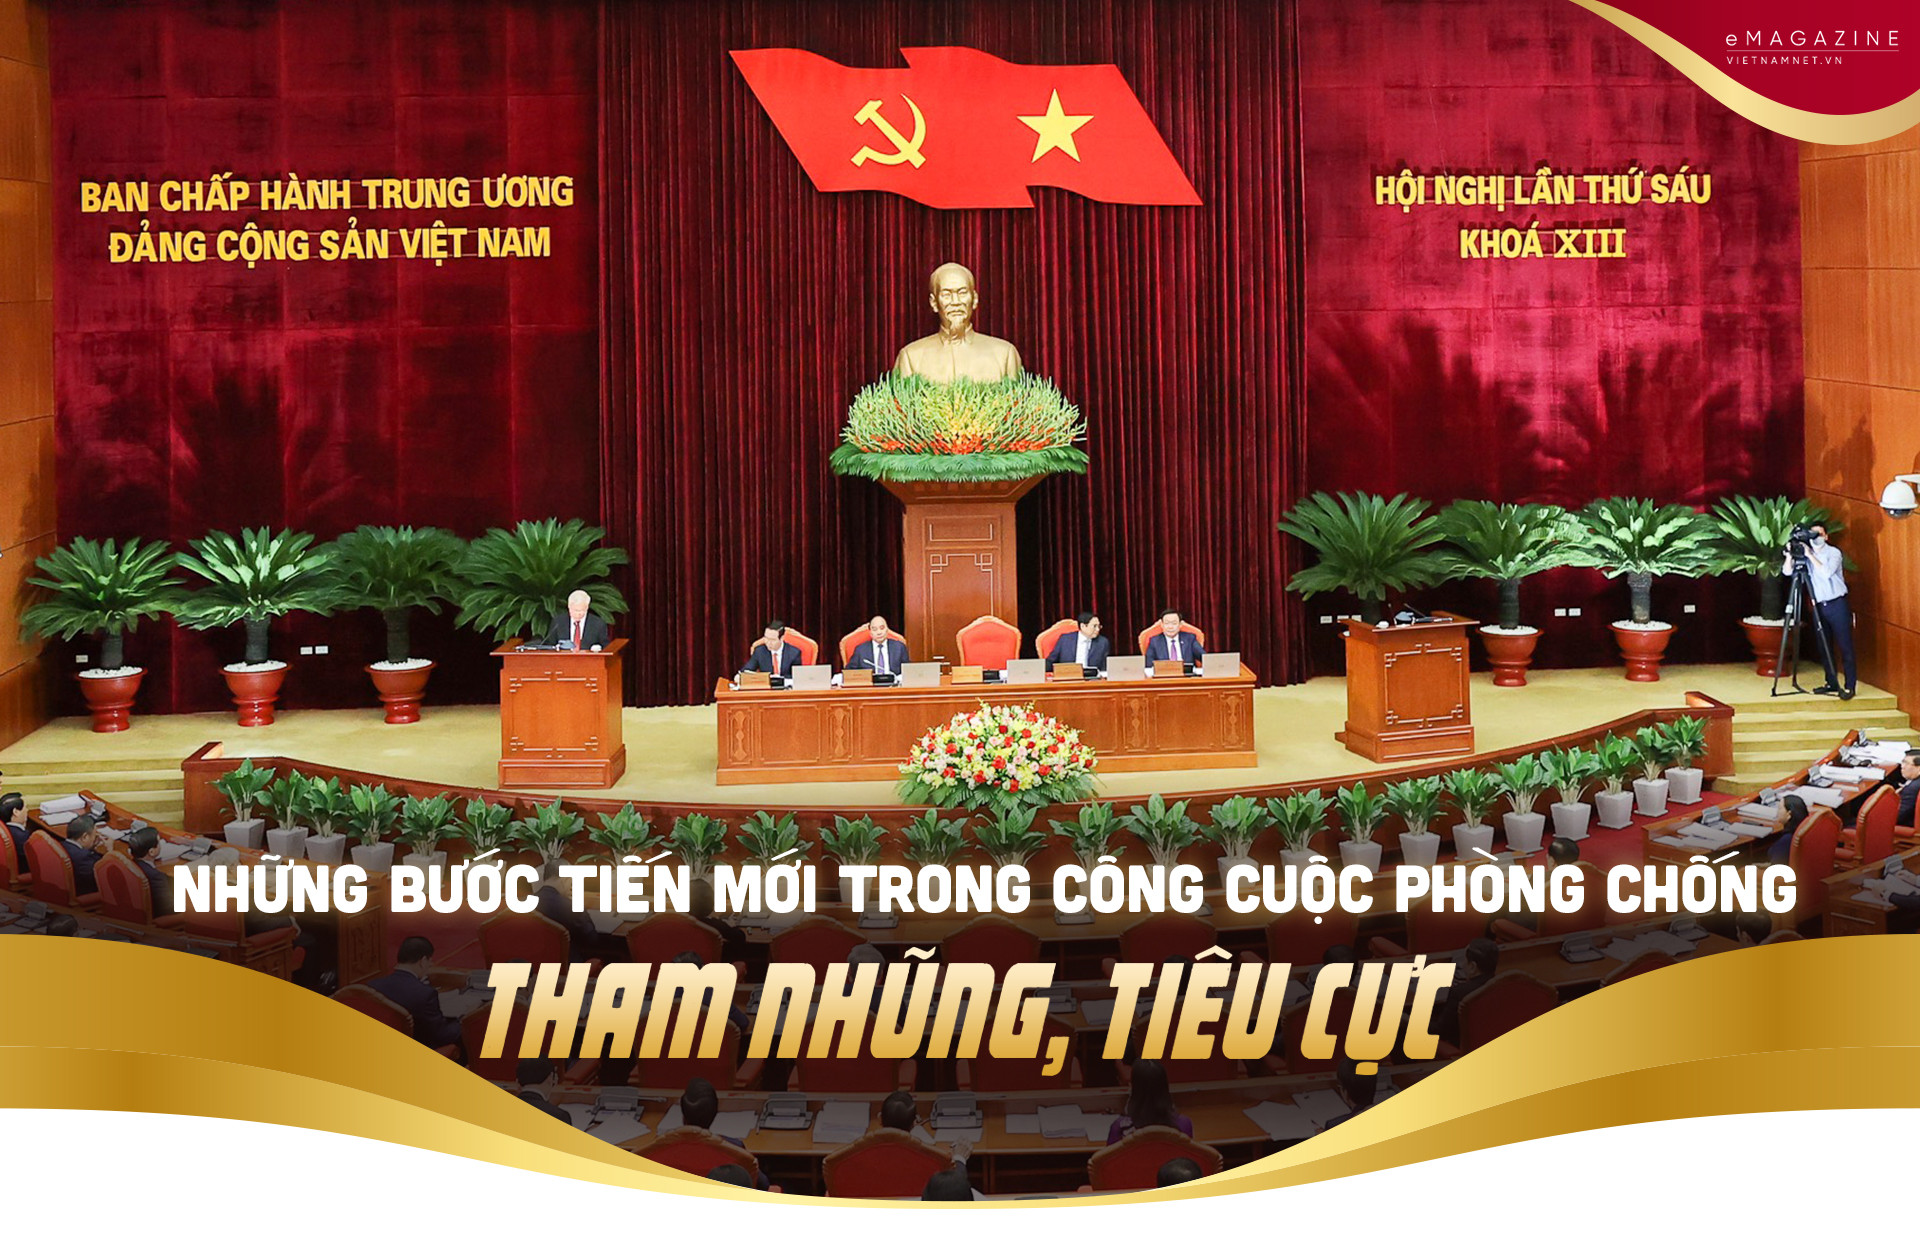 Toan van Tuyen bo chung giua hai nuoc Viet Nam va Trung Quoc hinh anh